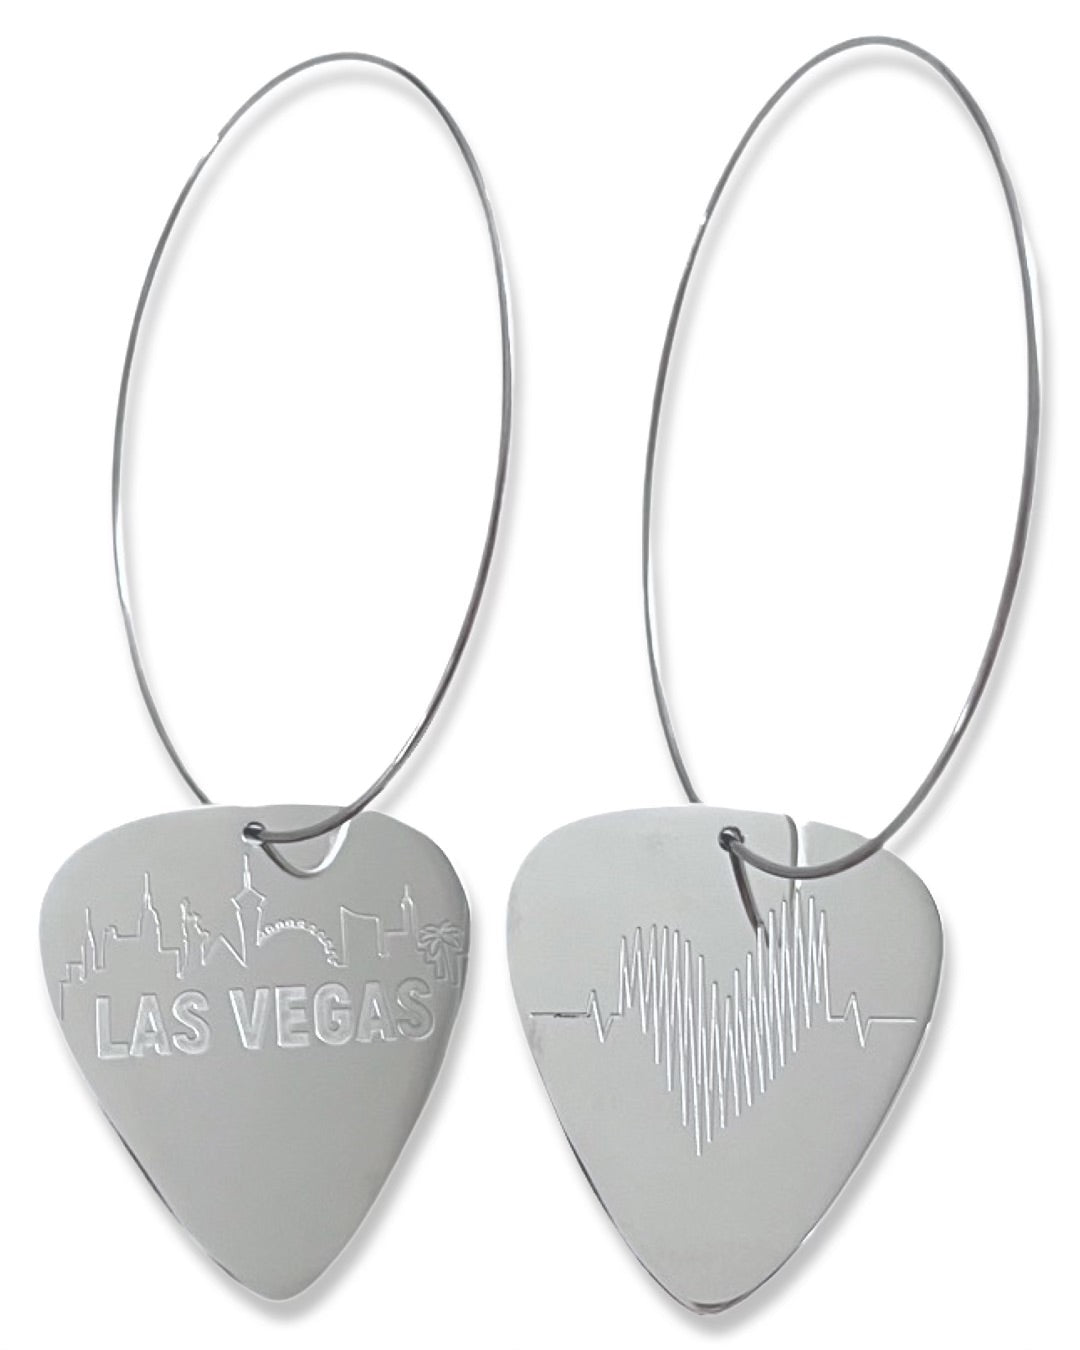 Las Vegas Skyline Steel Reversible Single Guitar Pick Earrings